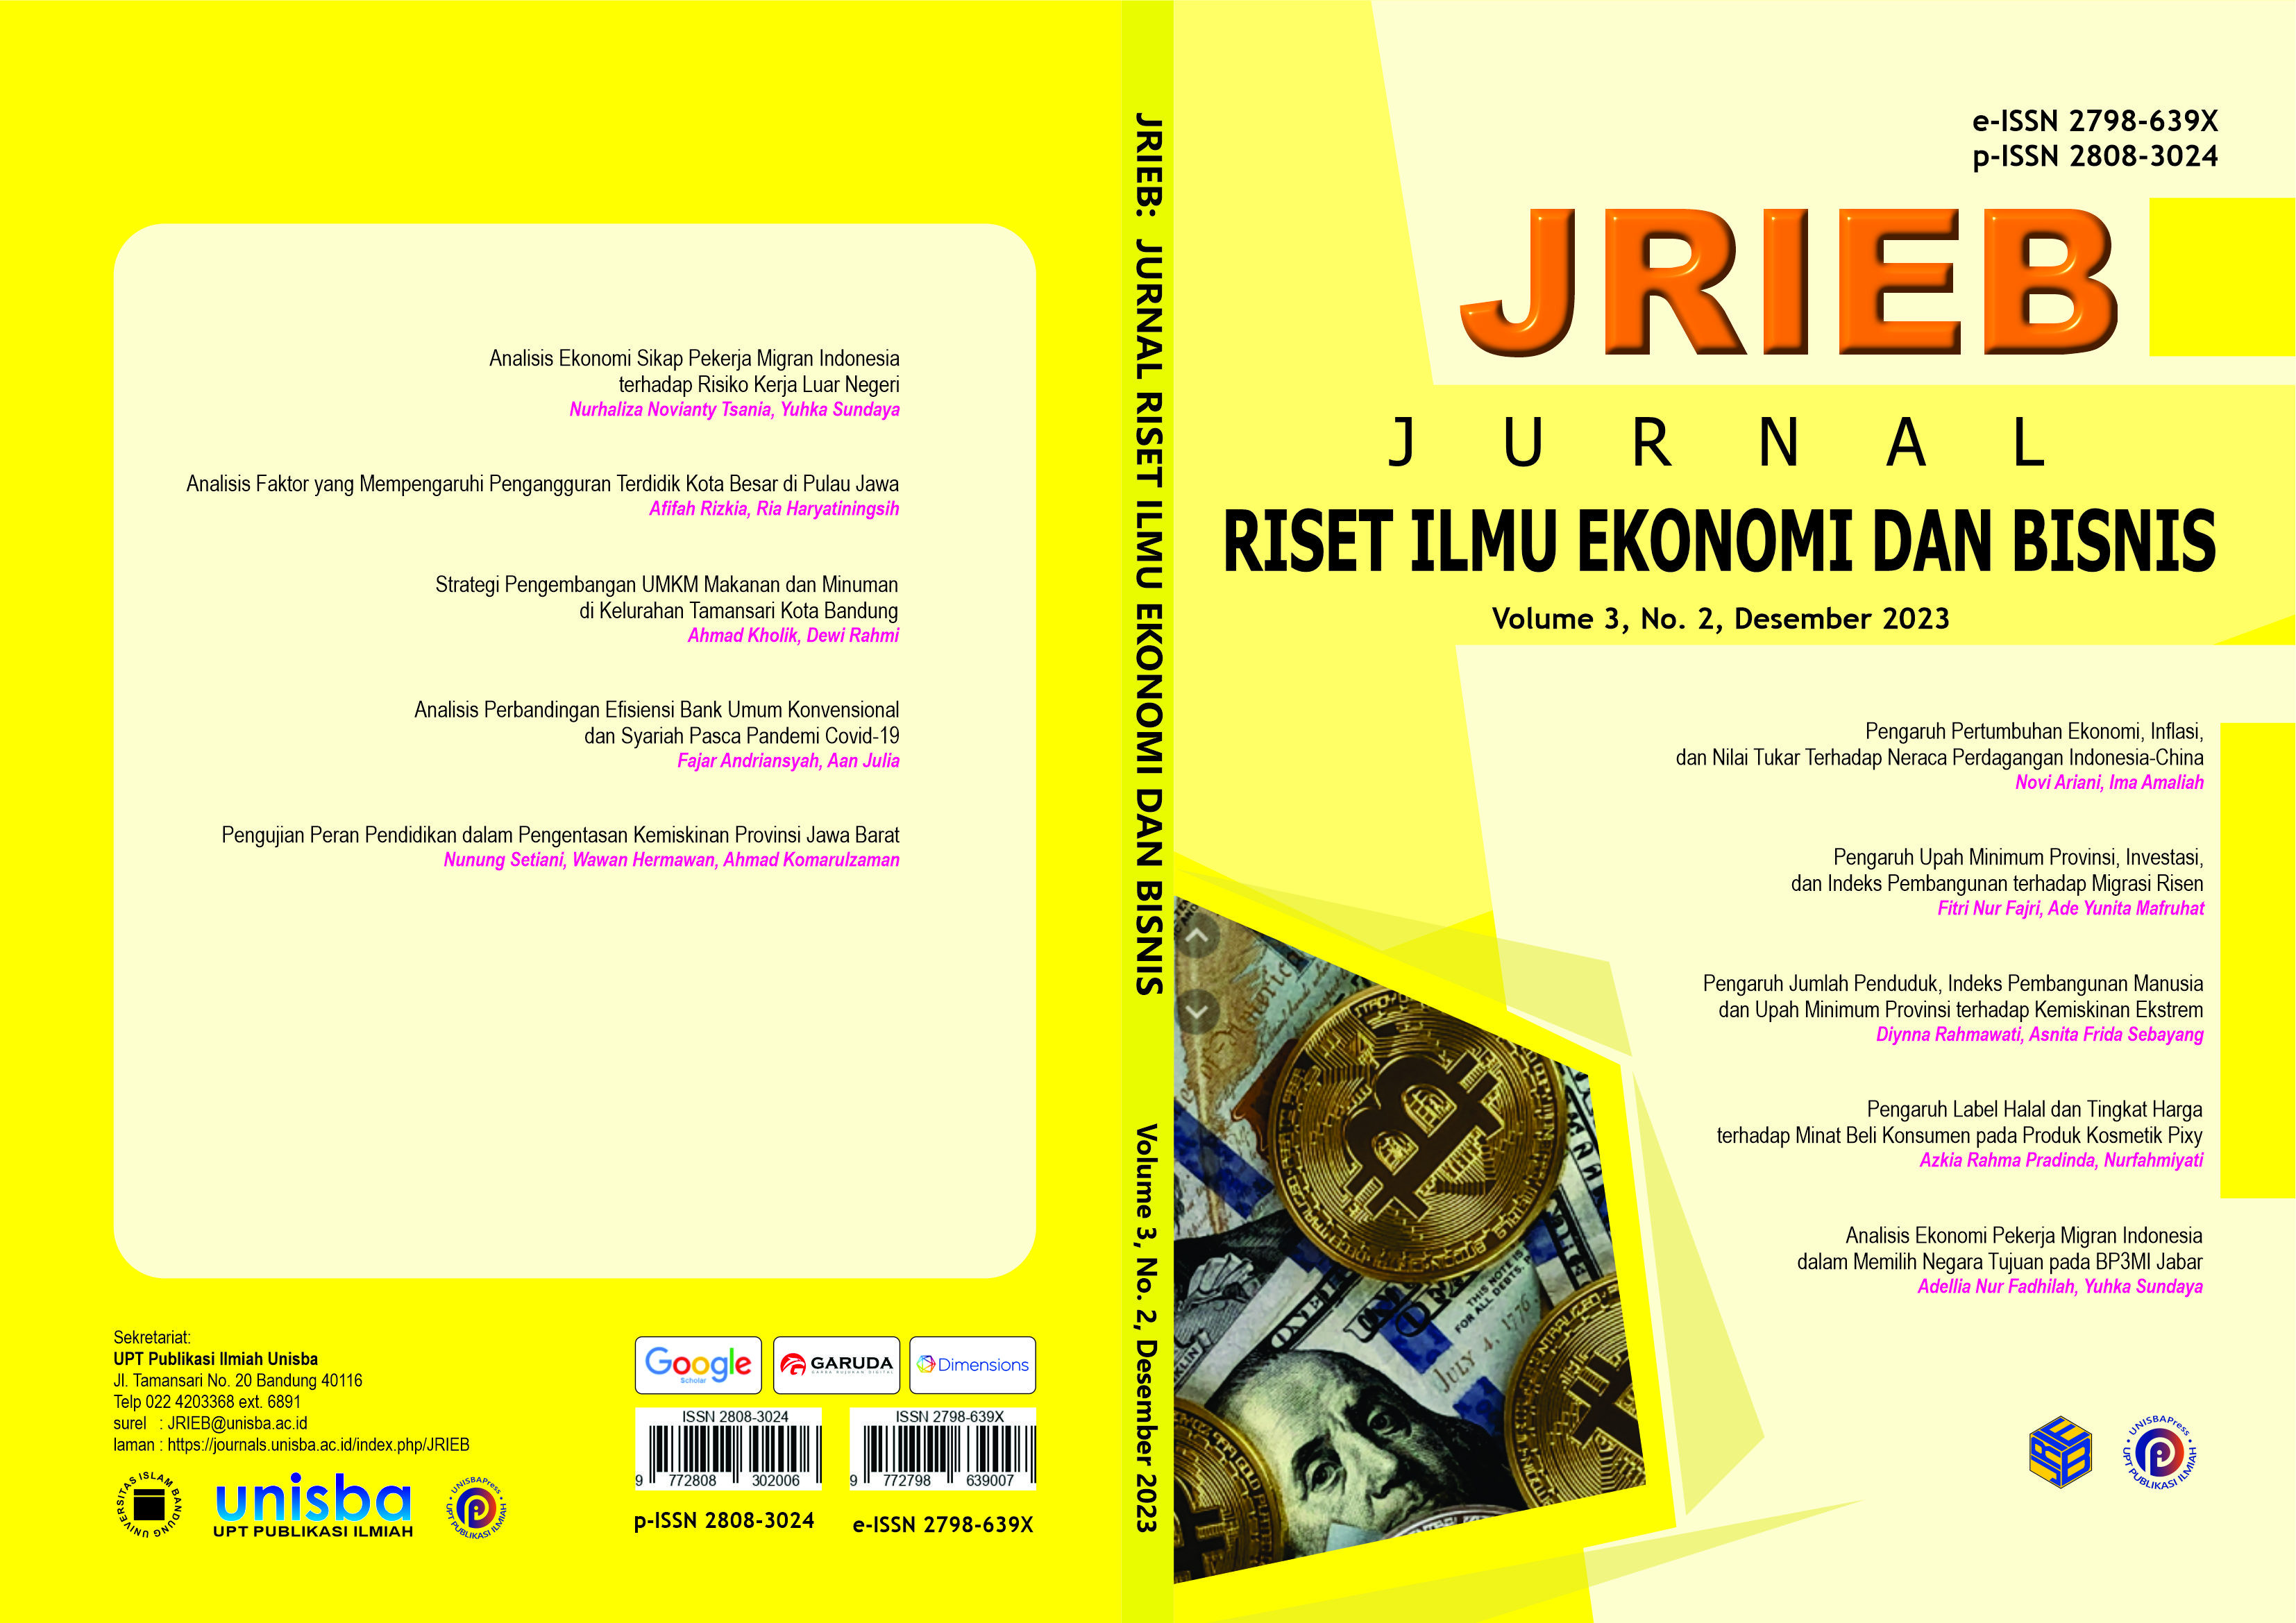 					View Volume 3, No. 2, Desember 2023, Jurnal Riset Ilmu Ekonomi dan Bisnis (JRIEB)
				